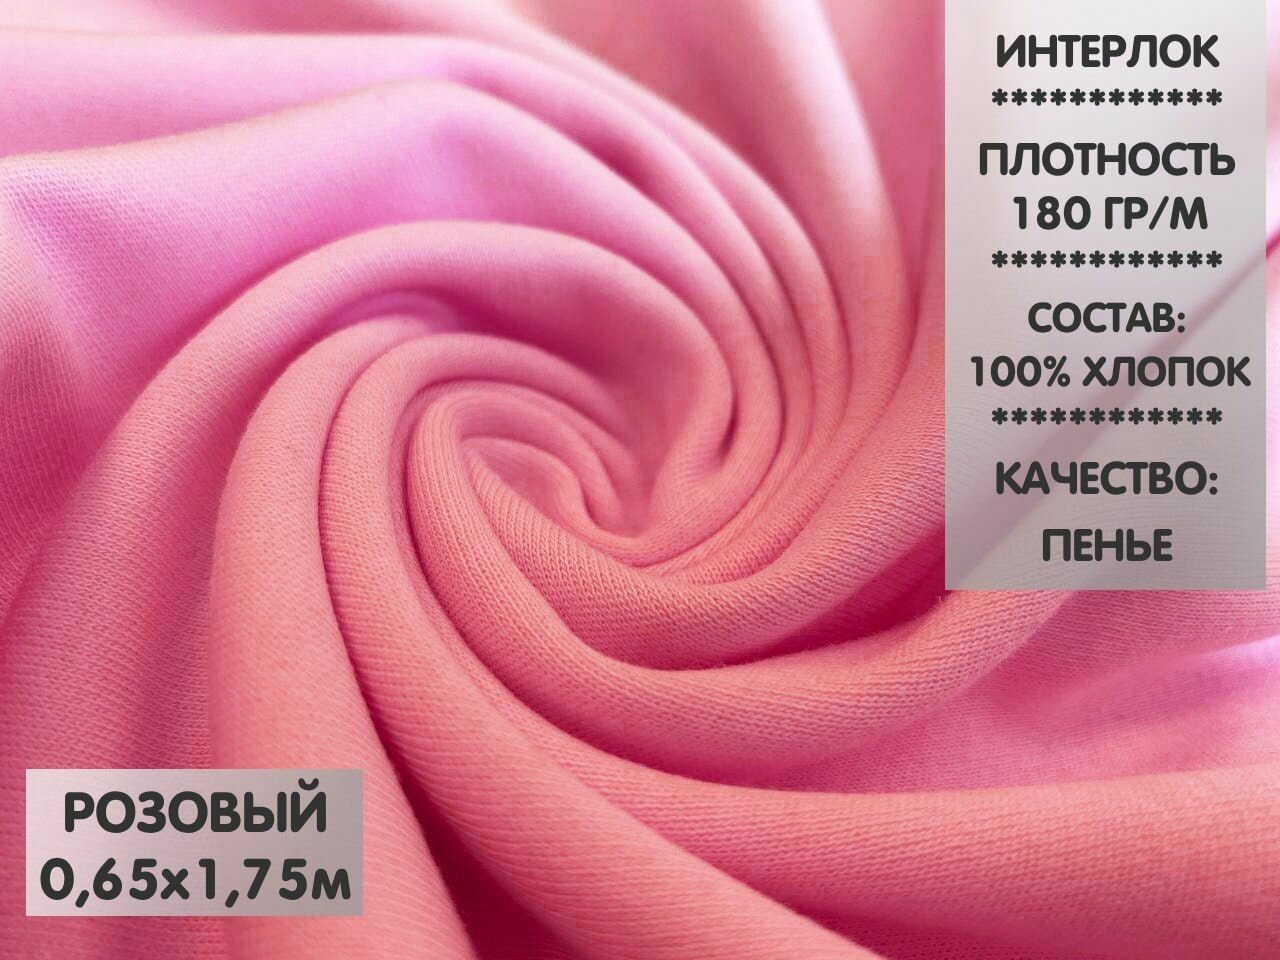 Ткань Интерлок компакт пенье